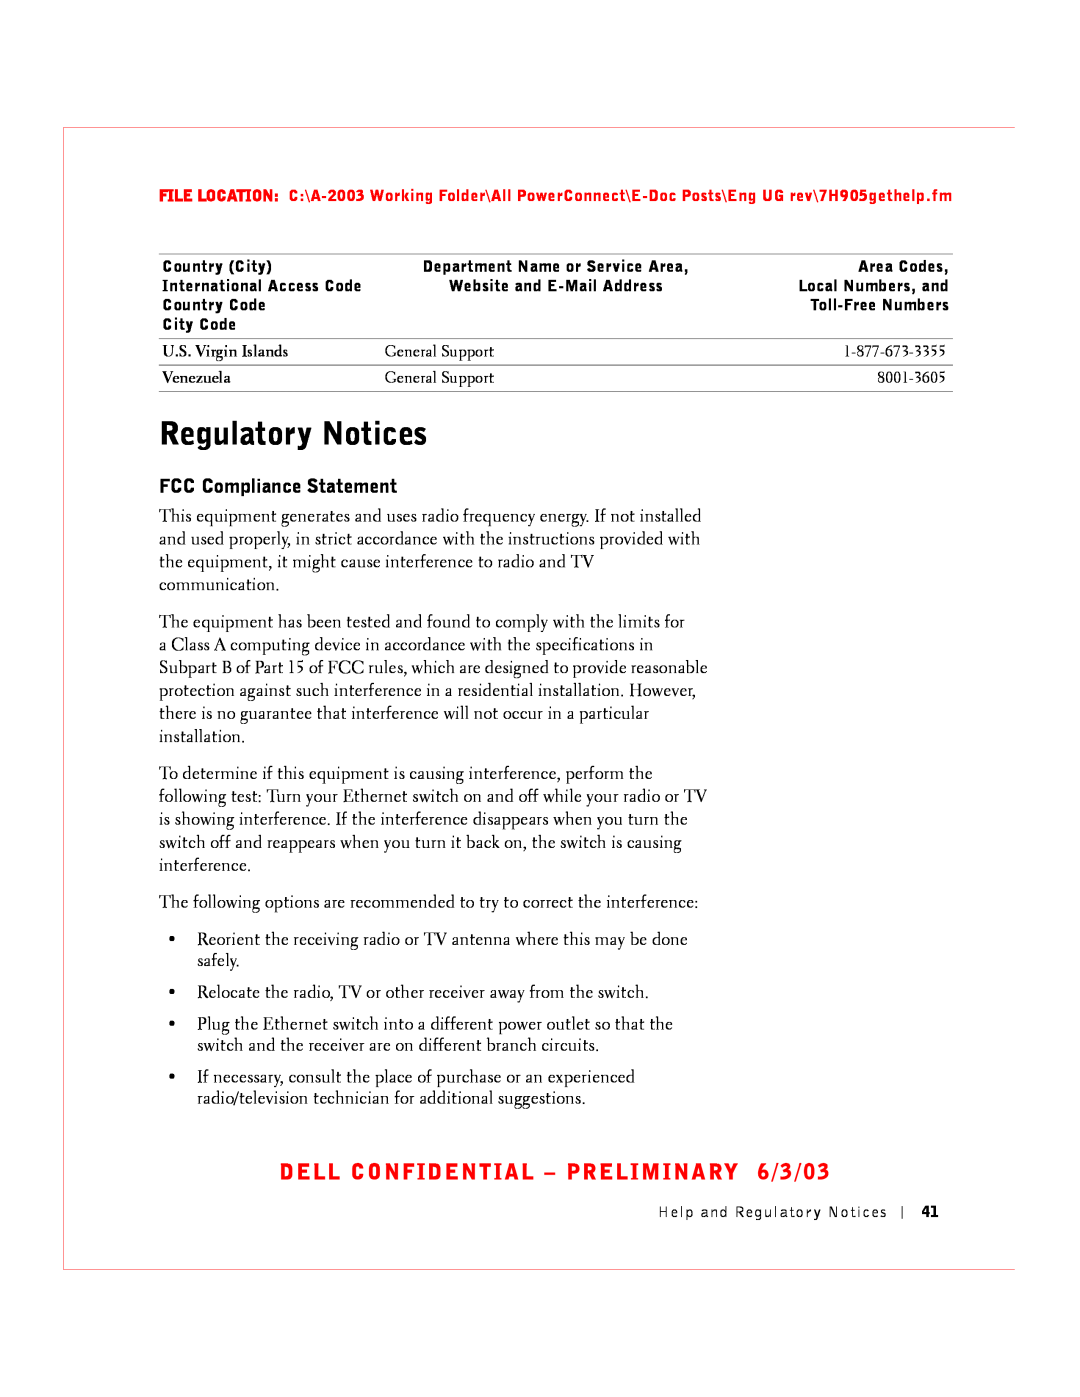 Dell 2016, 2024 manual Regulatory Notices, FCC Compliance Statement, DELL CONFIDENTIAL - PRELIMINARY 6/3/03 